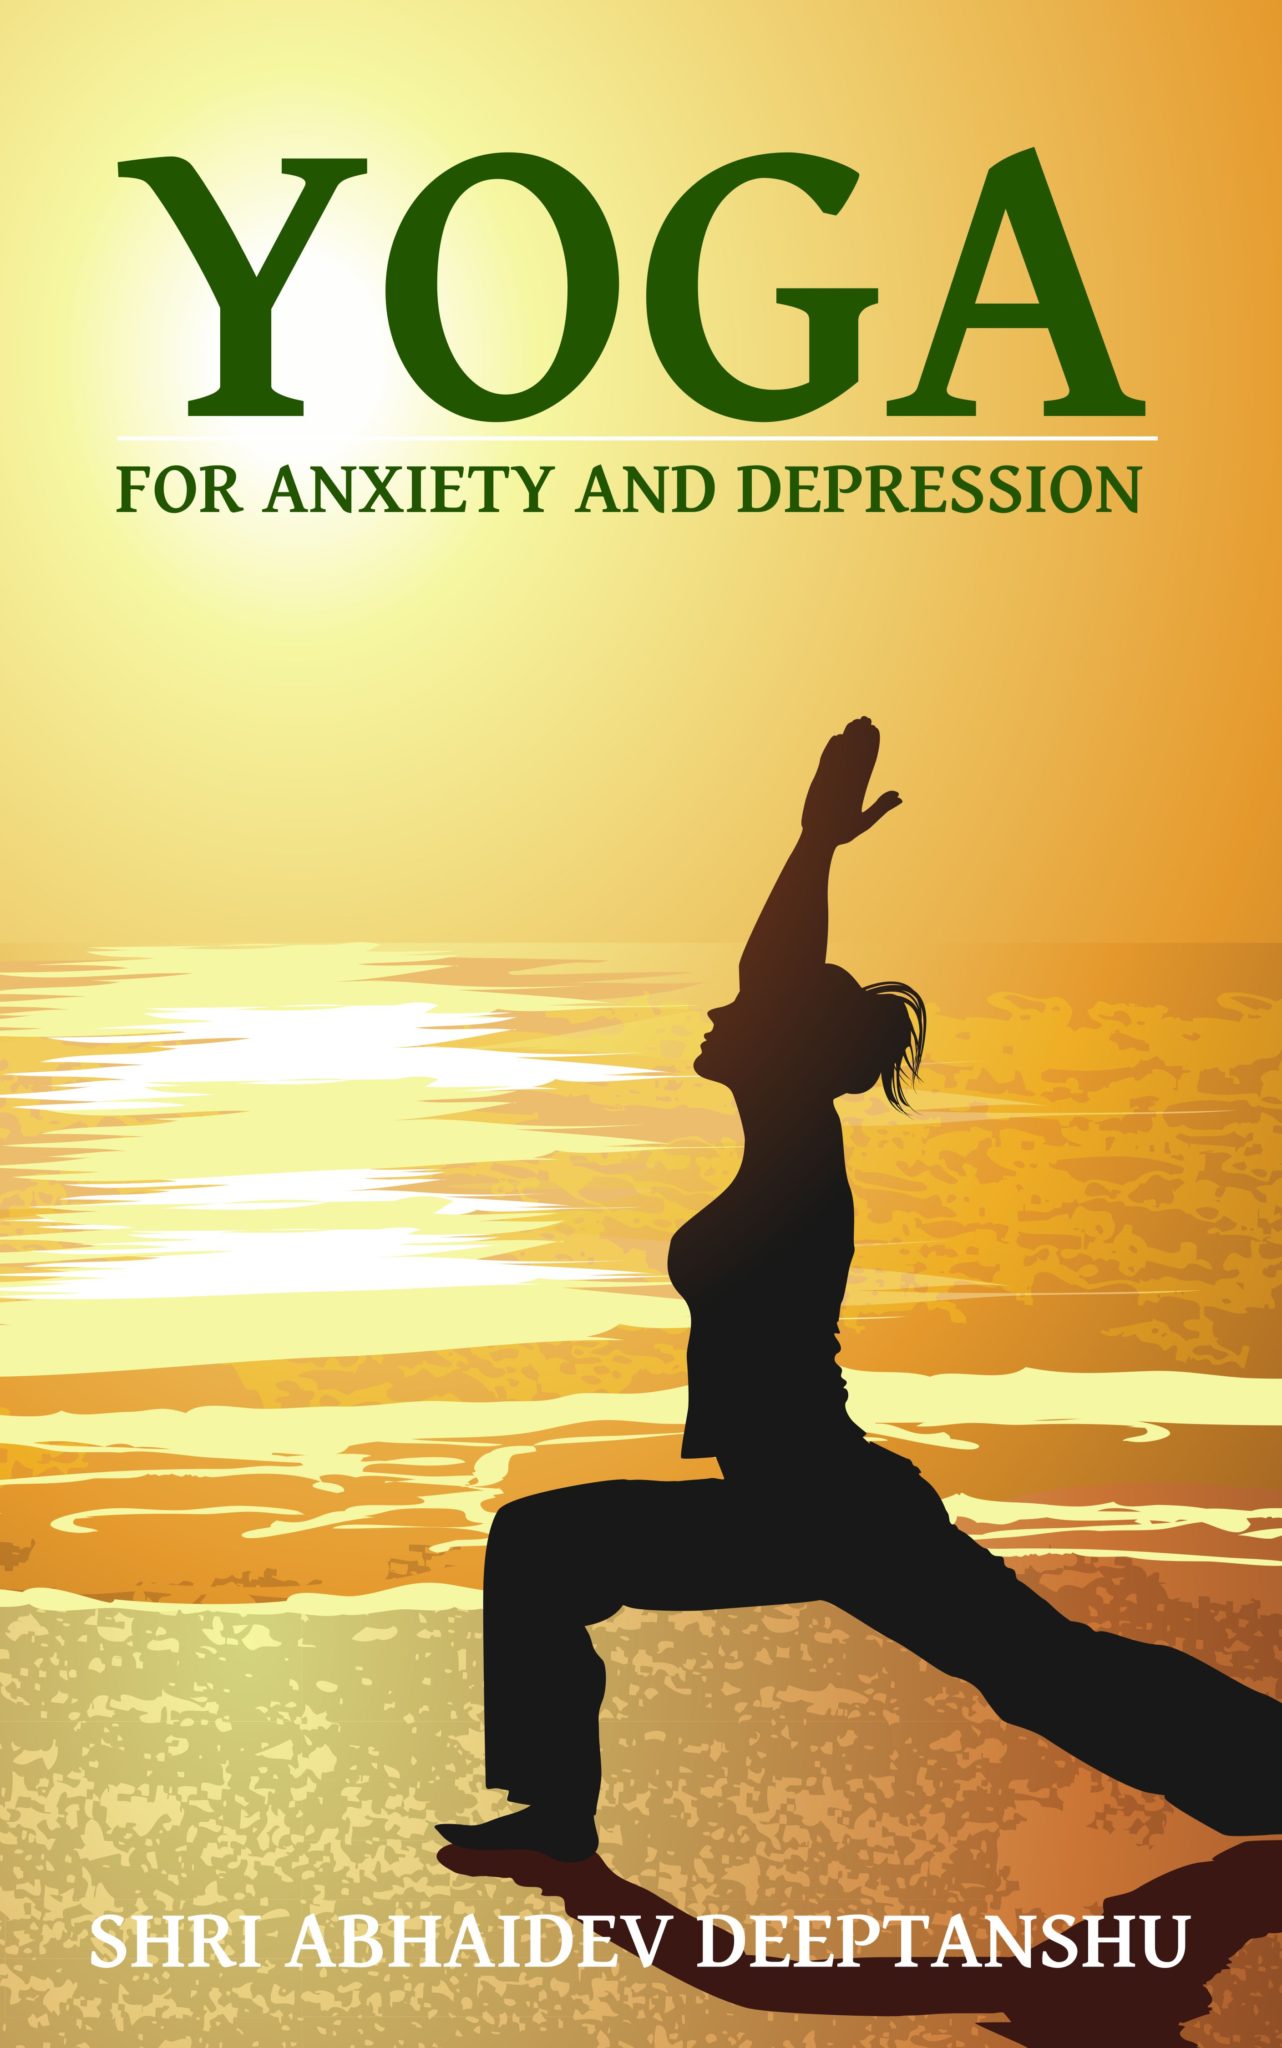 FREE: Yoga For Anxiety and Depression by Shri Abhaidev Deeptanshu